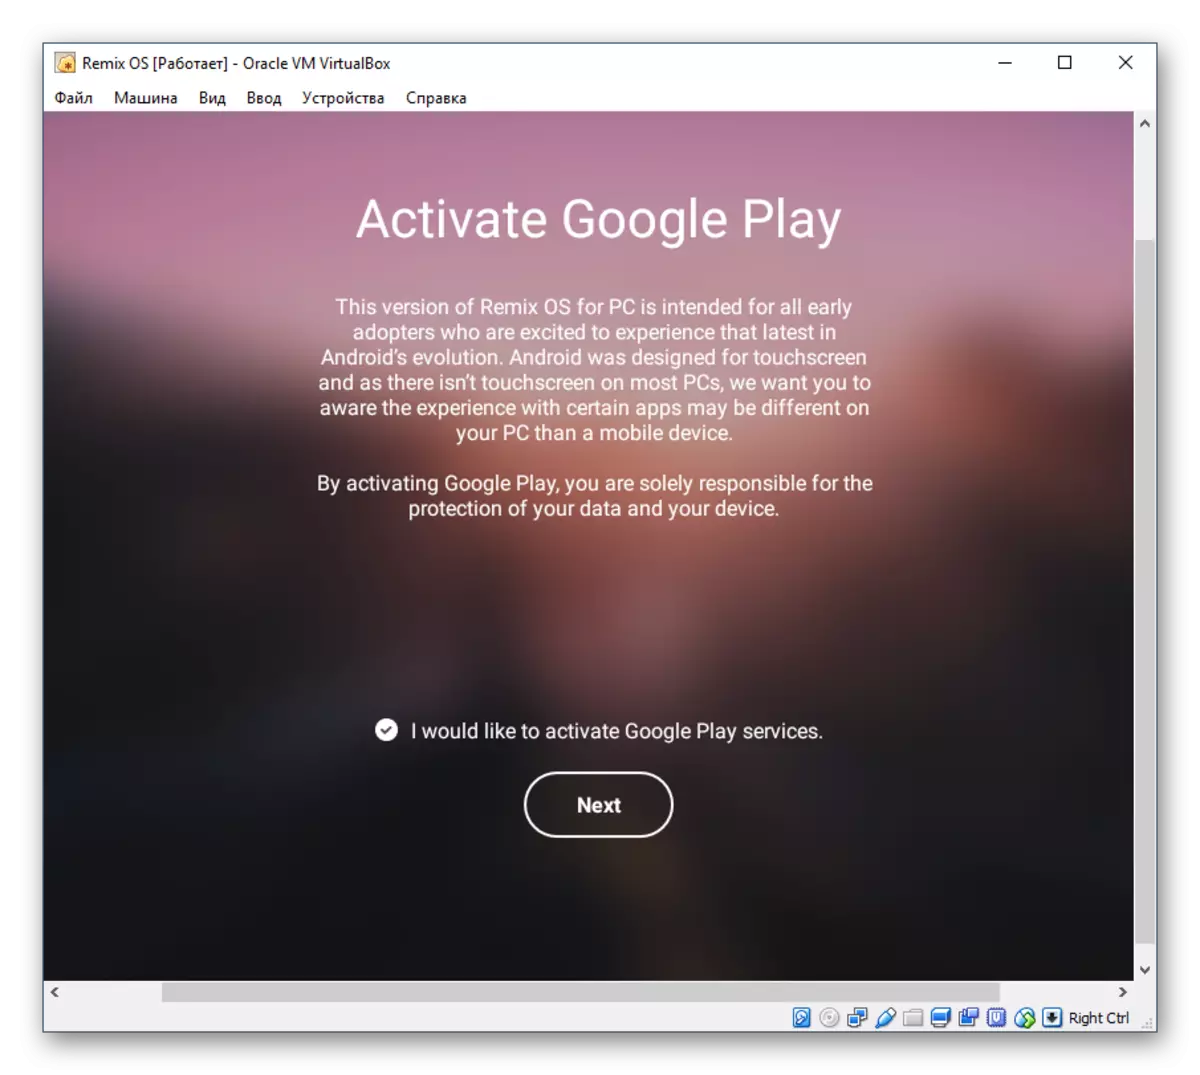 Instalace služby Google Play Remix OS virtualBox